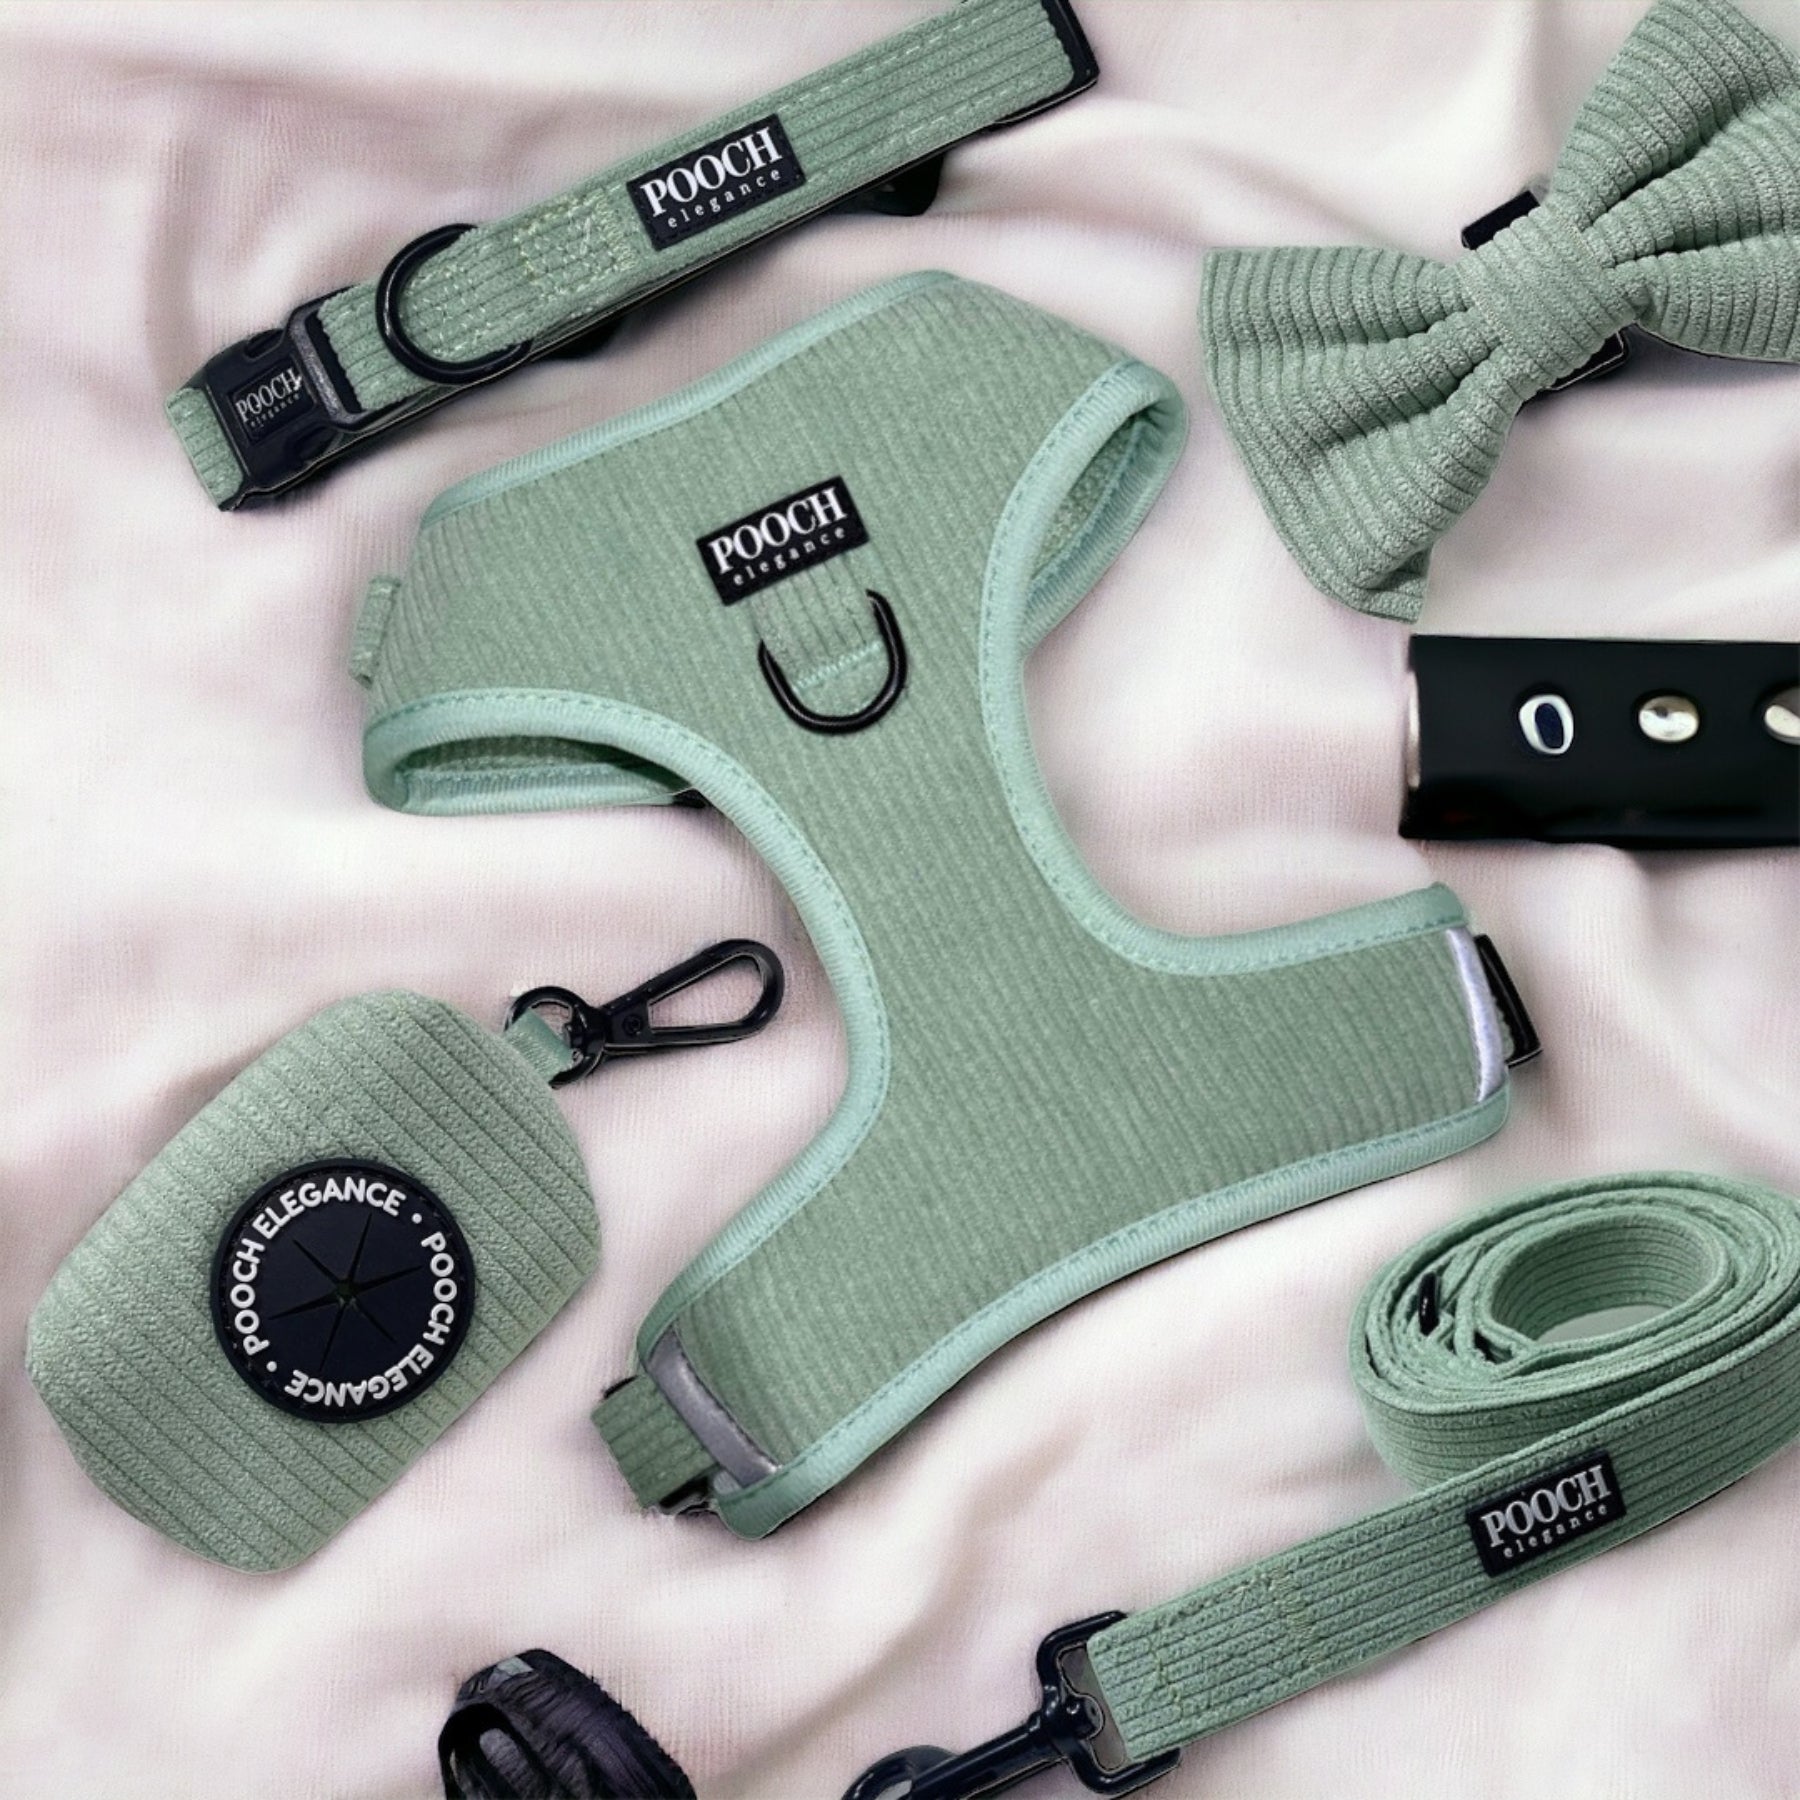 Corduroy Adjustable Harness - Green Mist